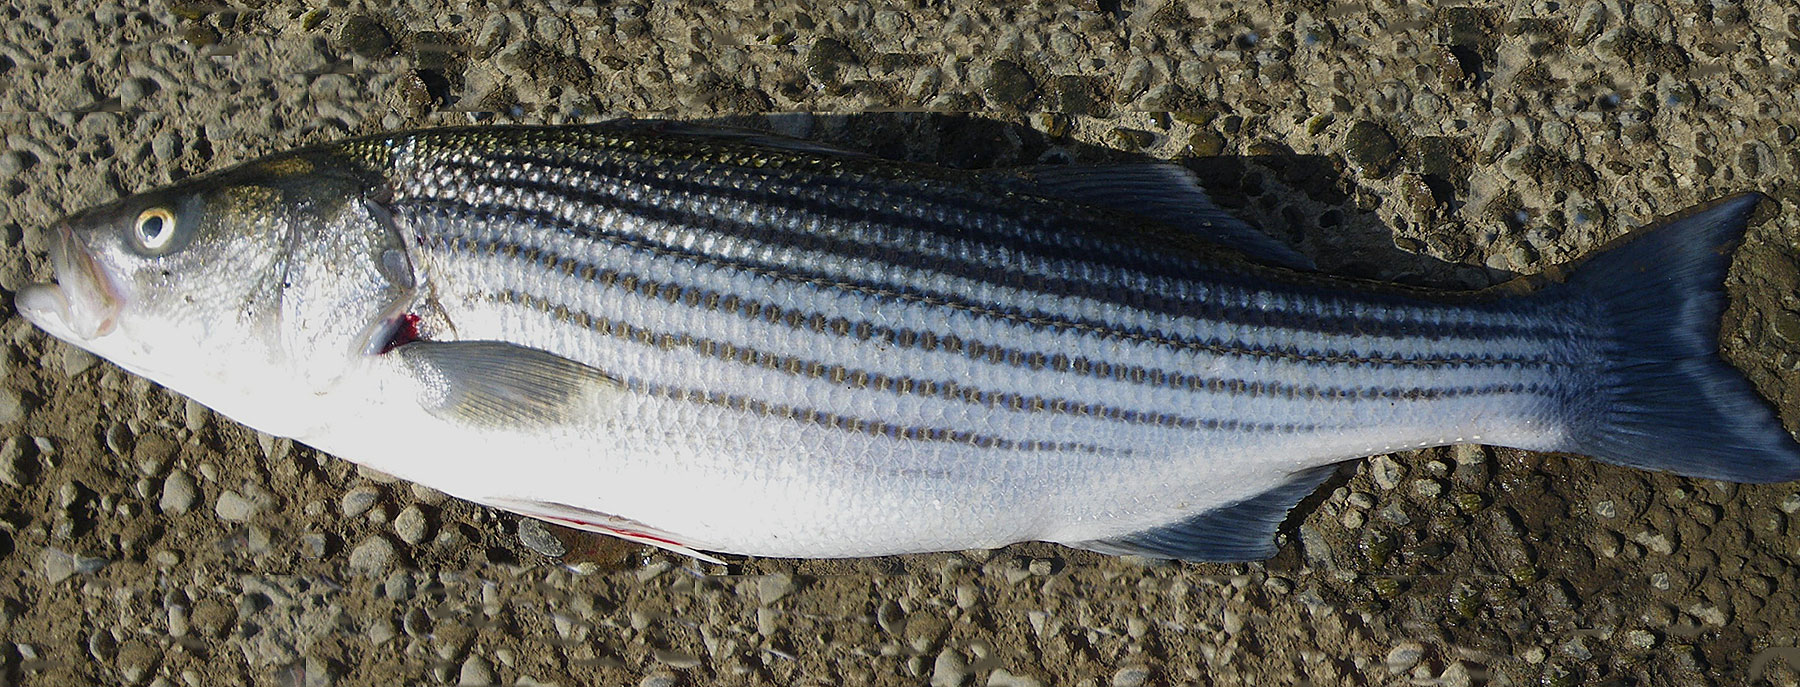 Striped bass  Oregon Department of Fish & Wildlife